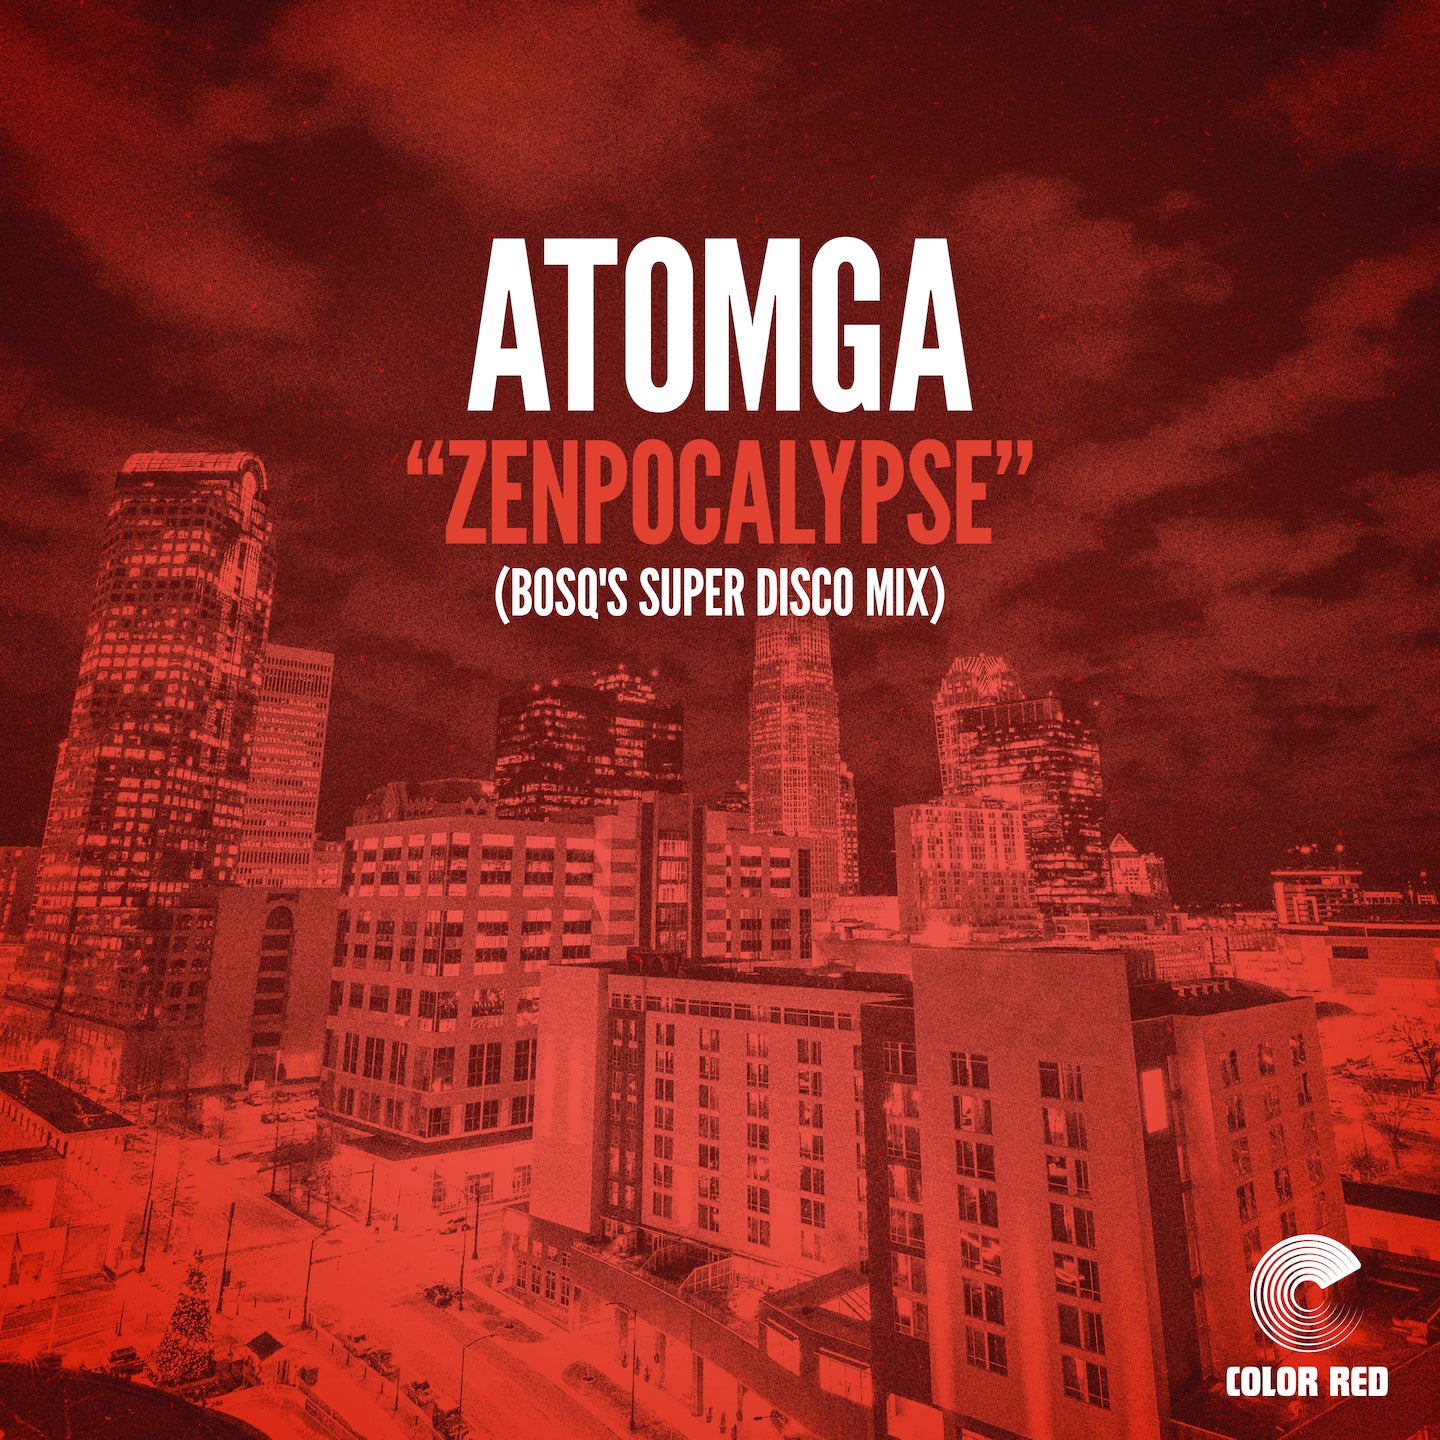 Zenpocalypse (Bosq's Super Disco Mix)